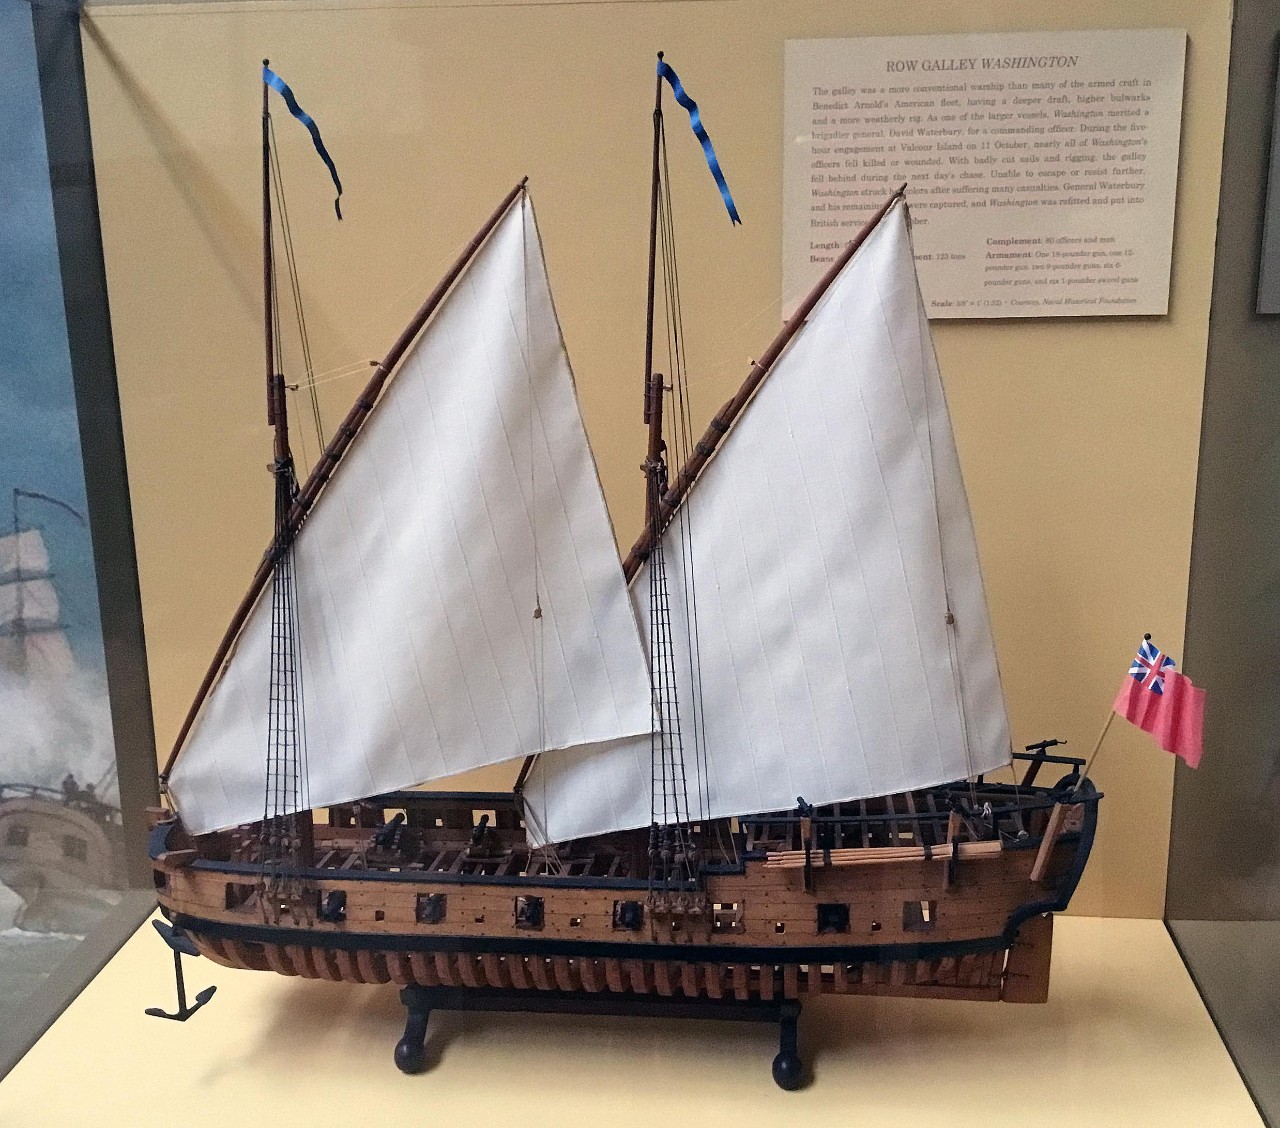 NMUSN:  American Revolution:  Continental Navy galley Washington